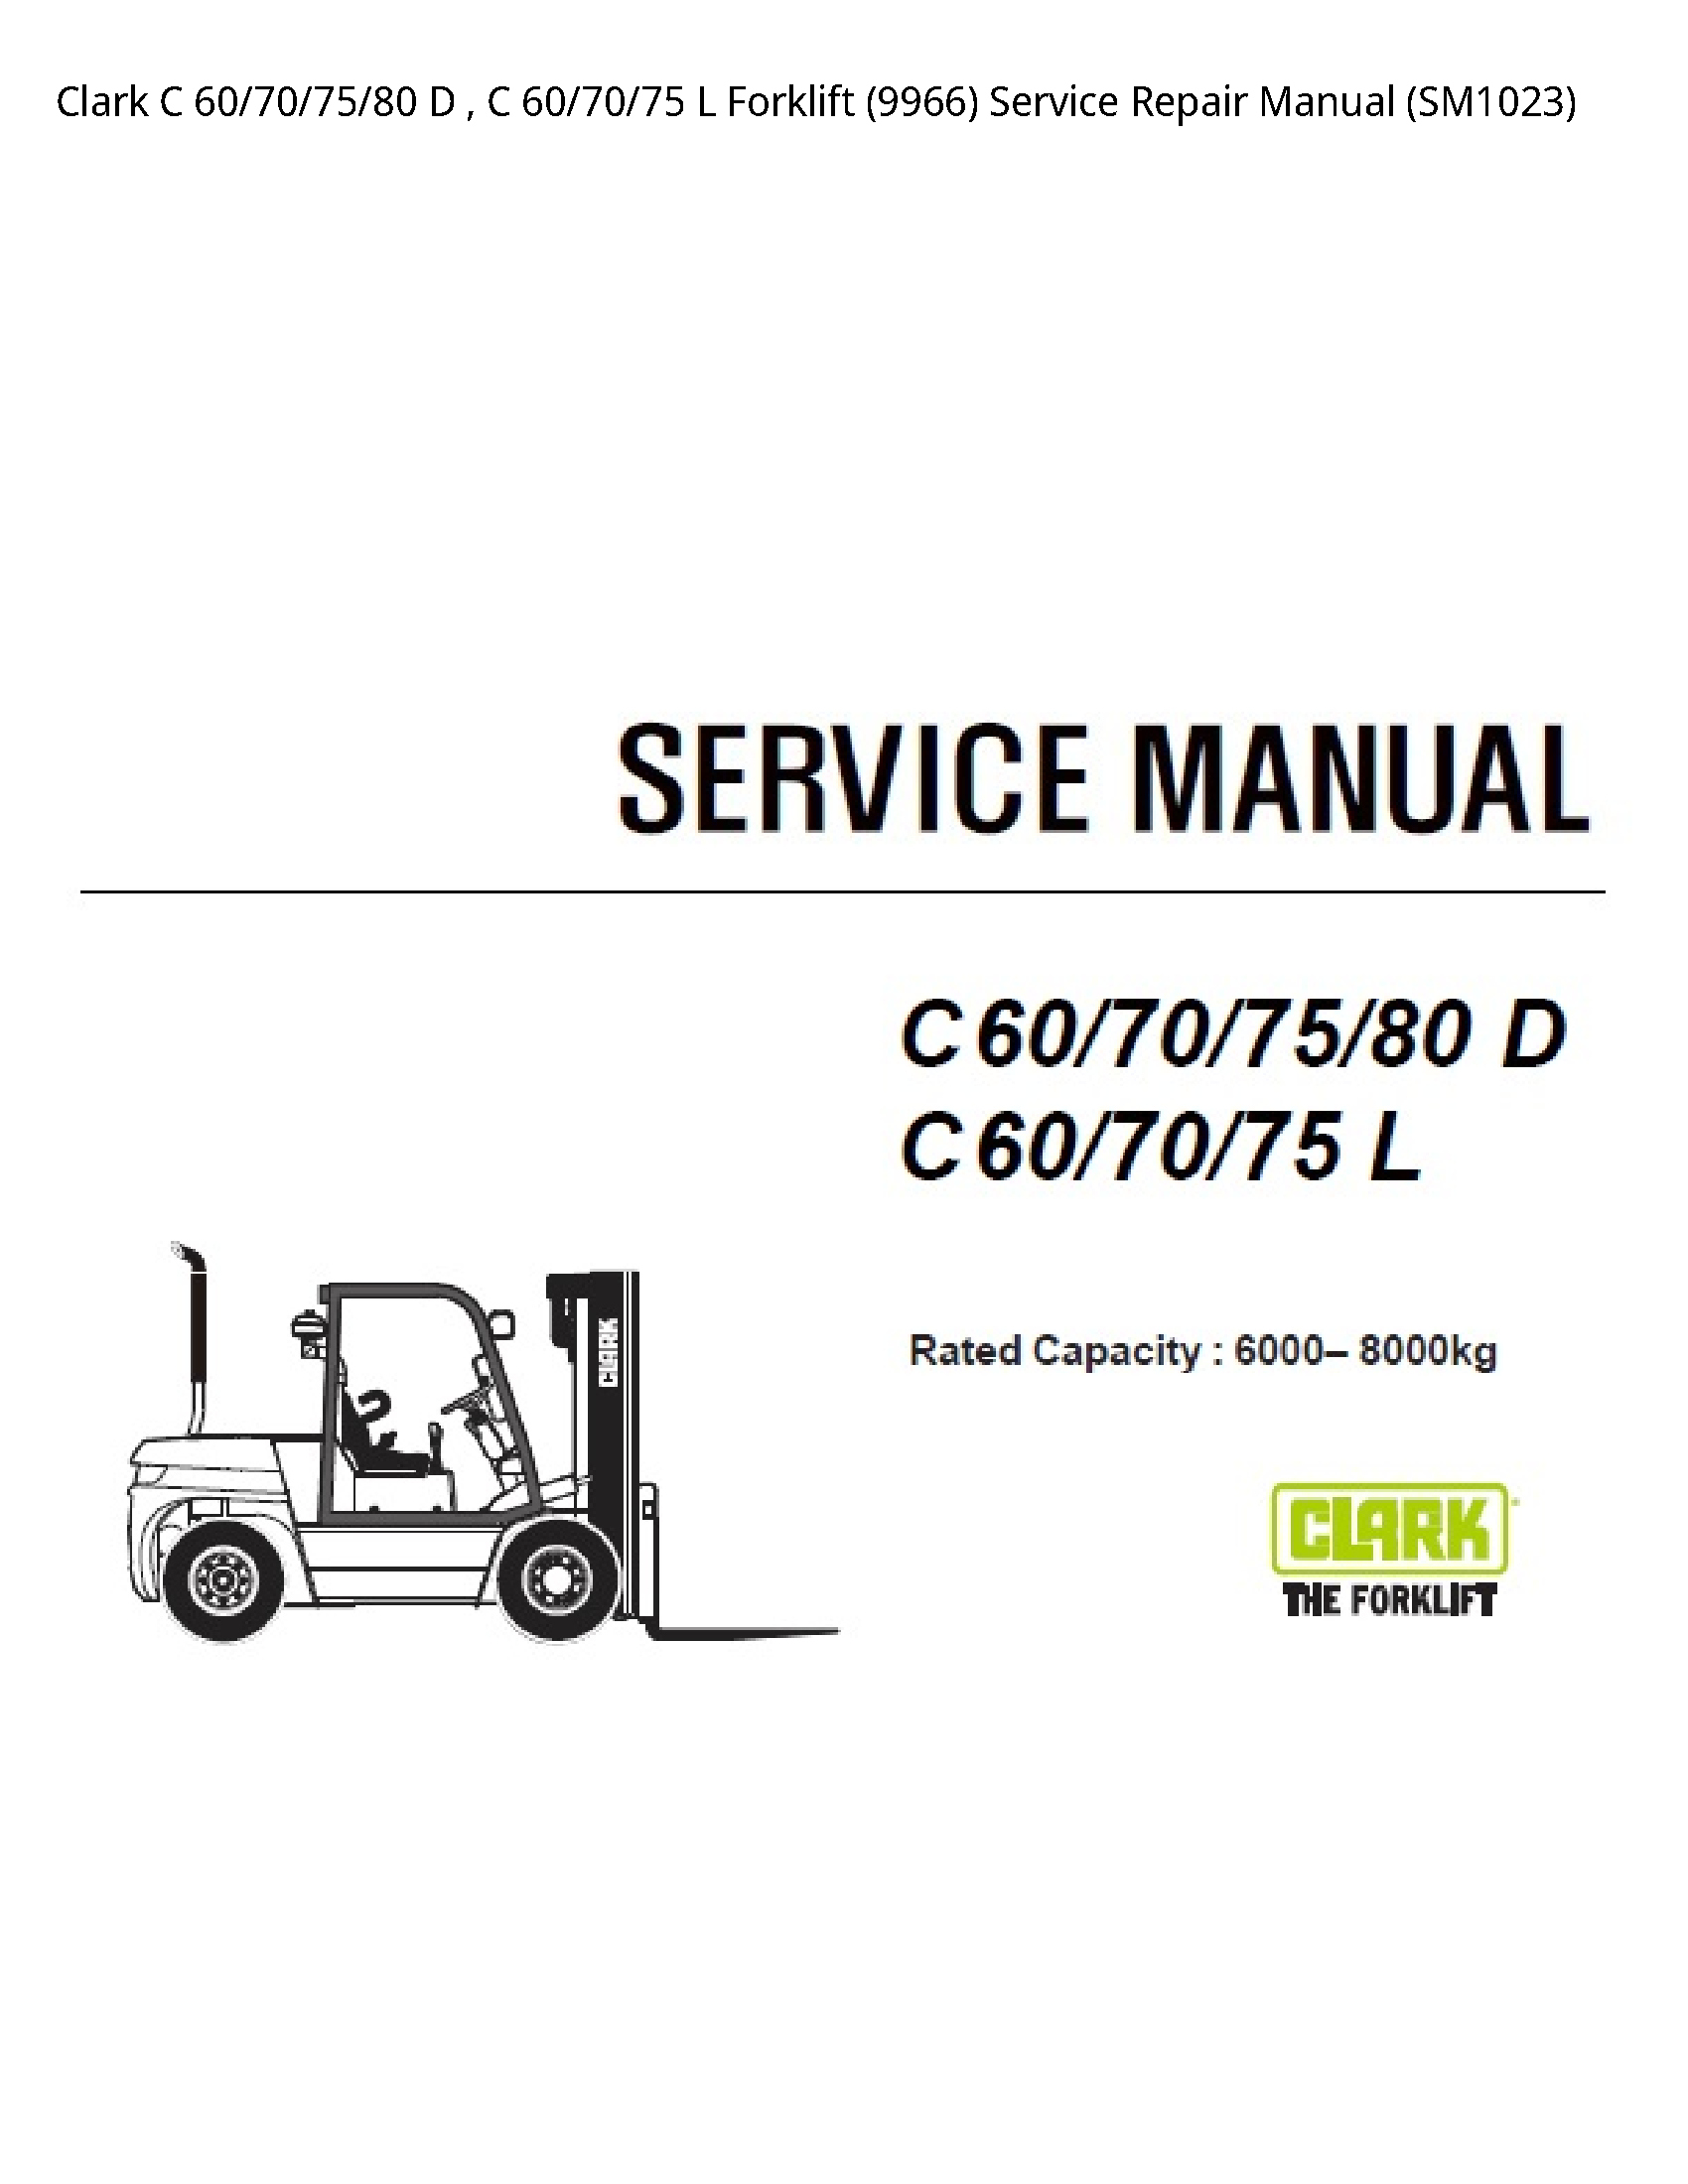 Clark 60 Forklift manual